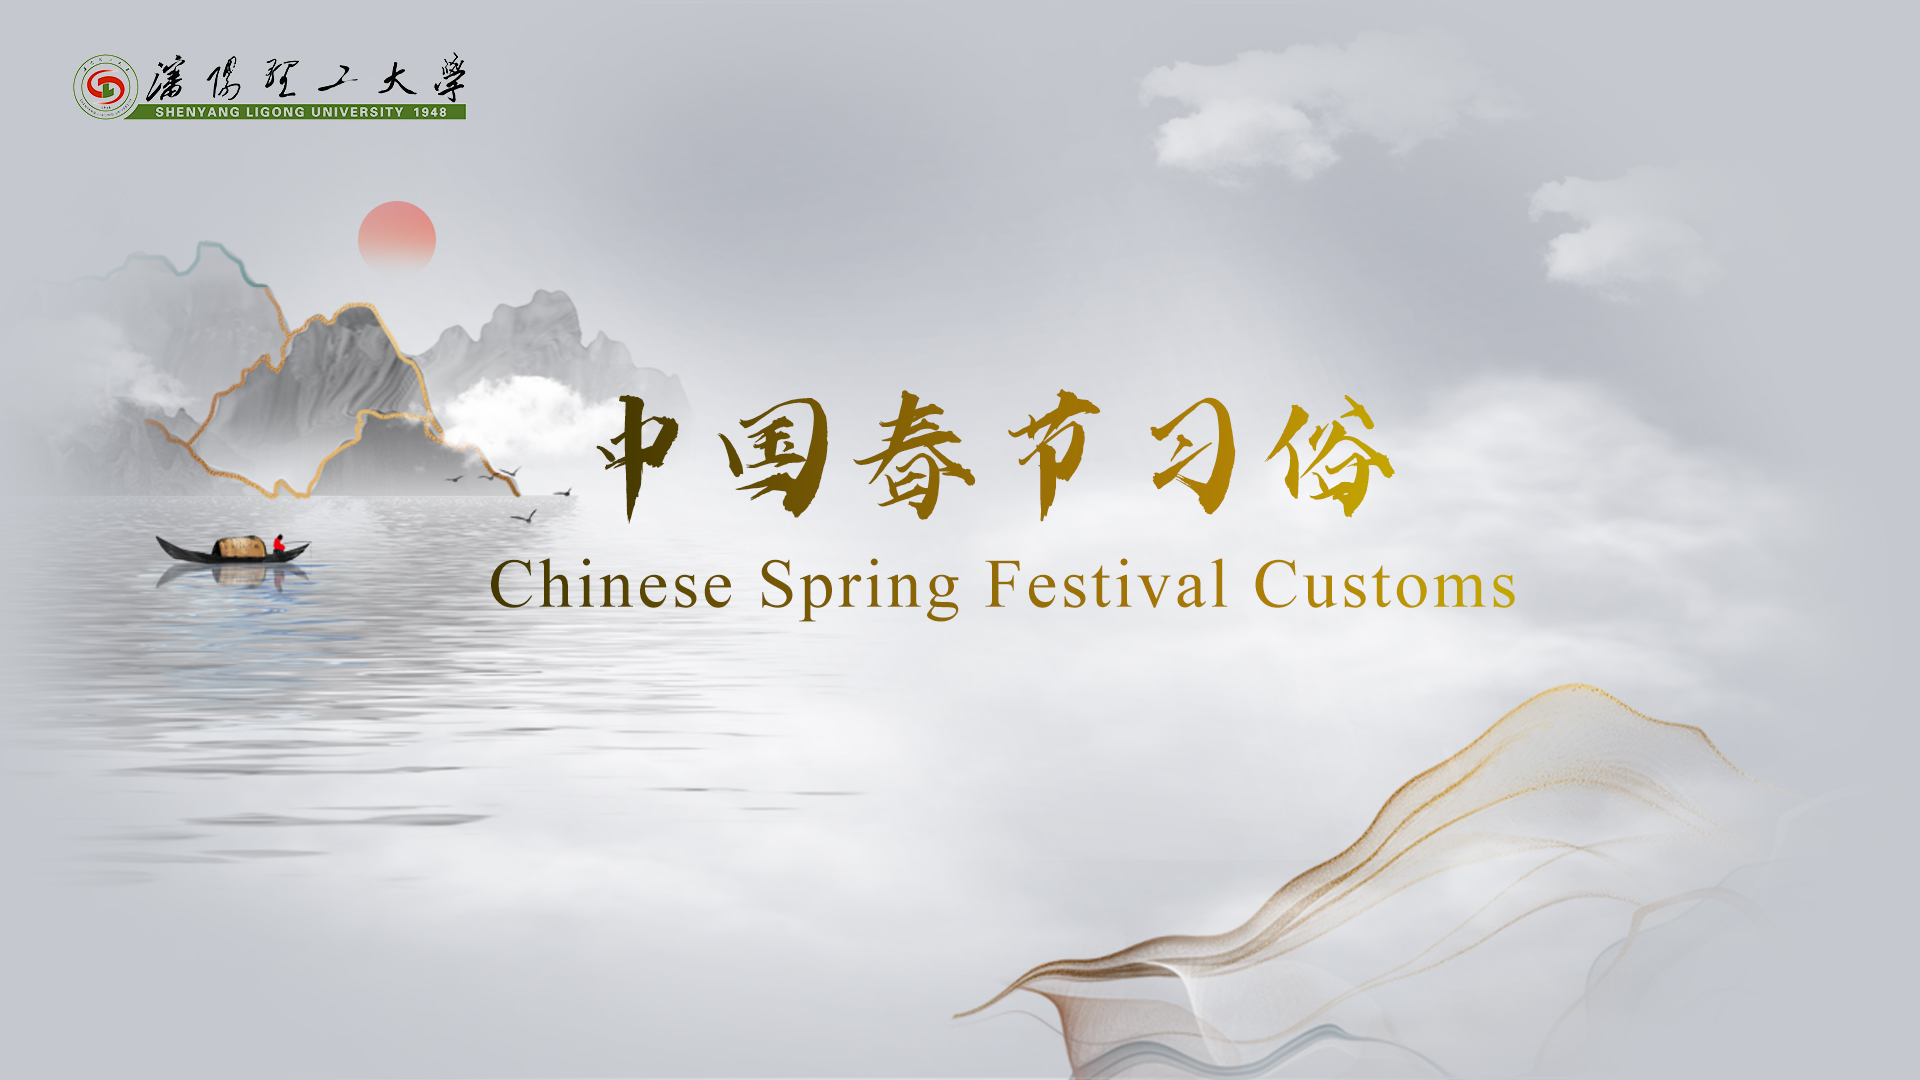 Chinese Spring Festival Customs